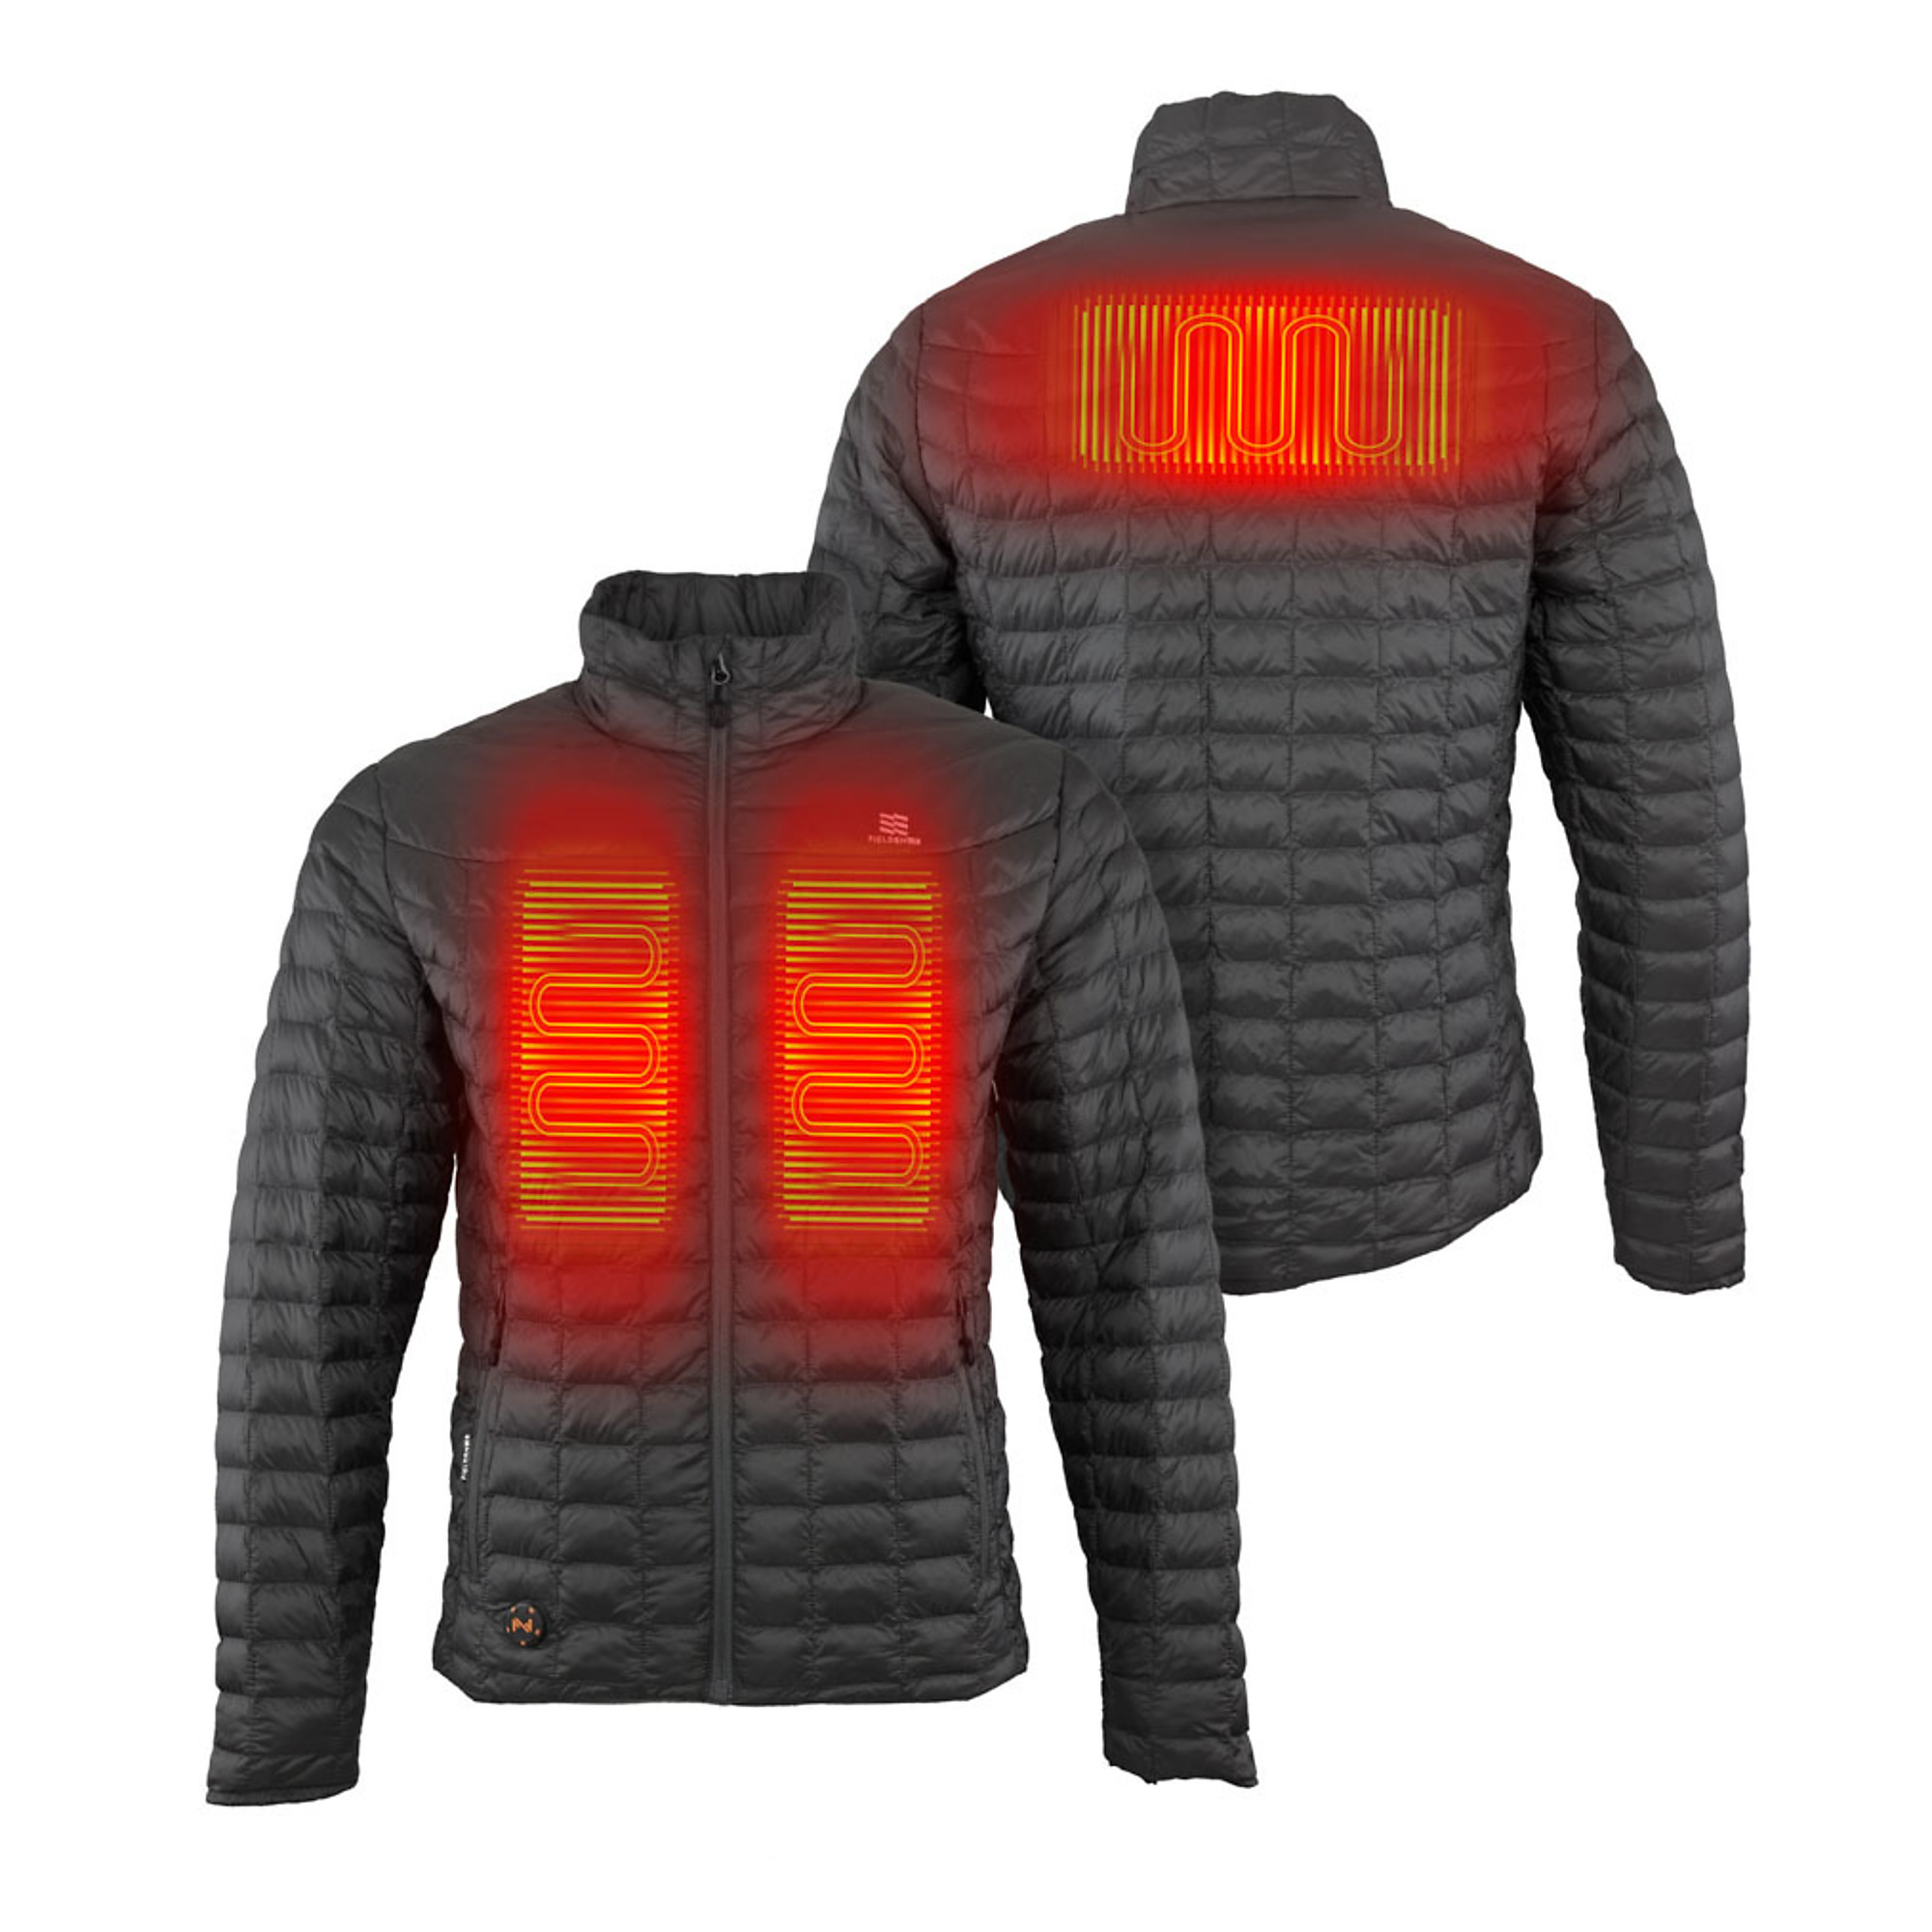 Fieldsheer, Men's Backcountry Heated Jacket with 7.4v Battery, Size XL, Color Black, Model MWMJ04010520